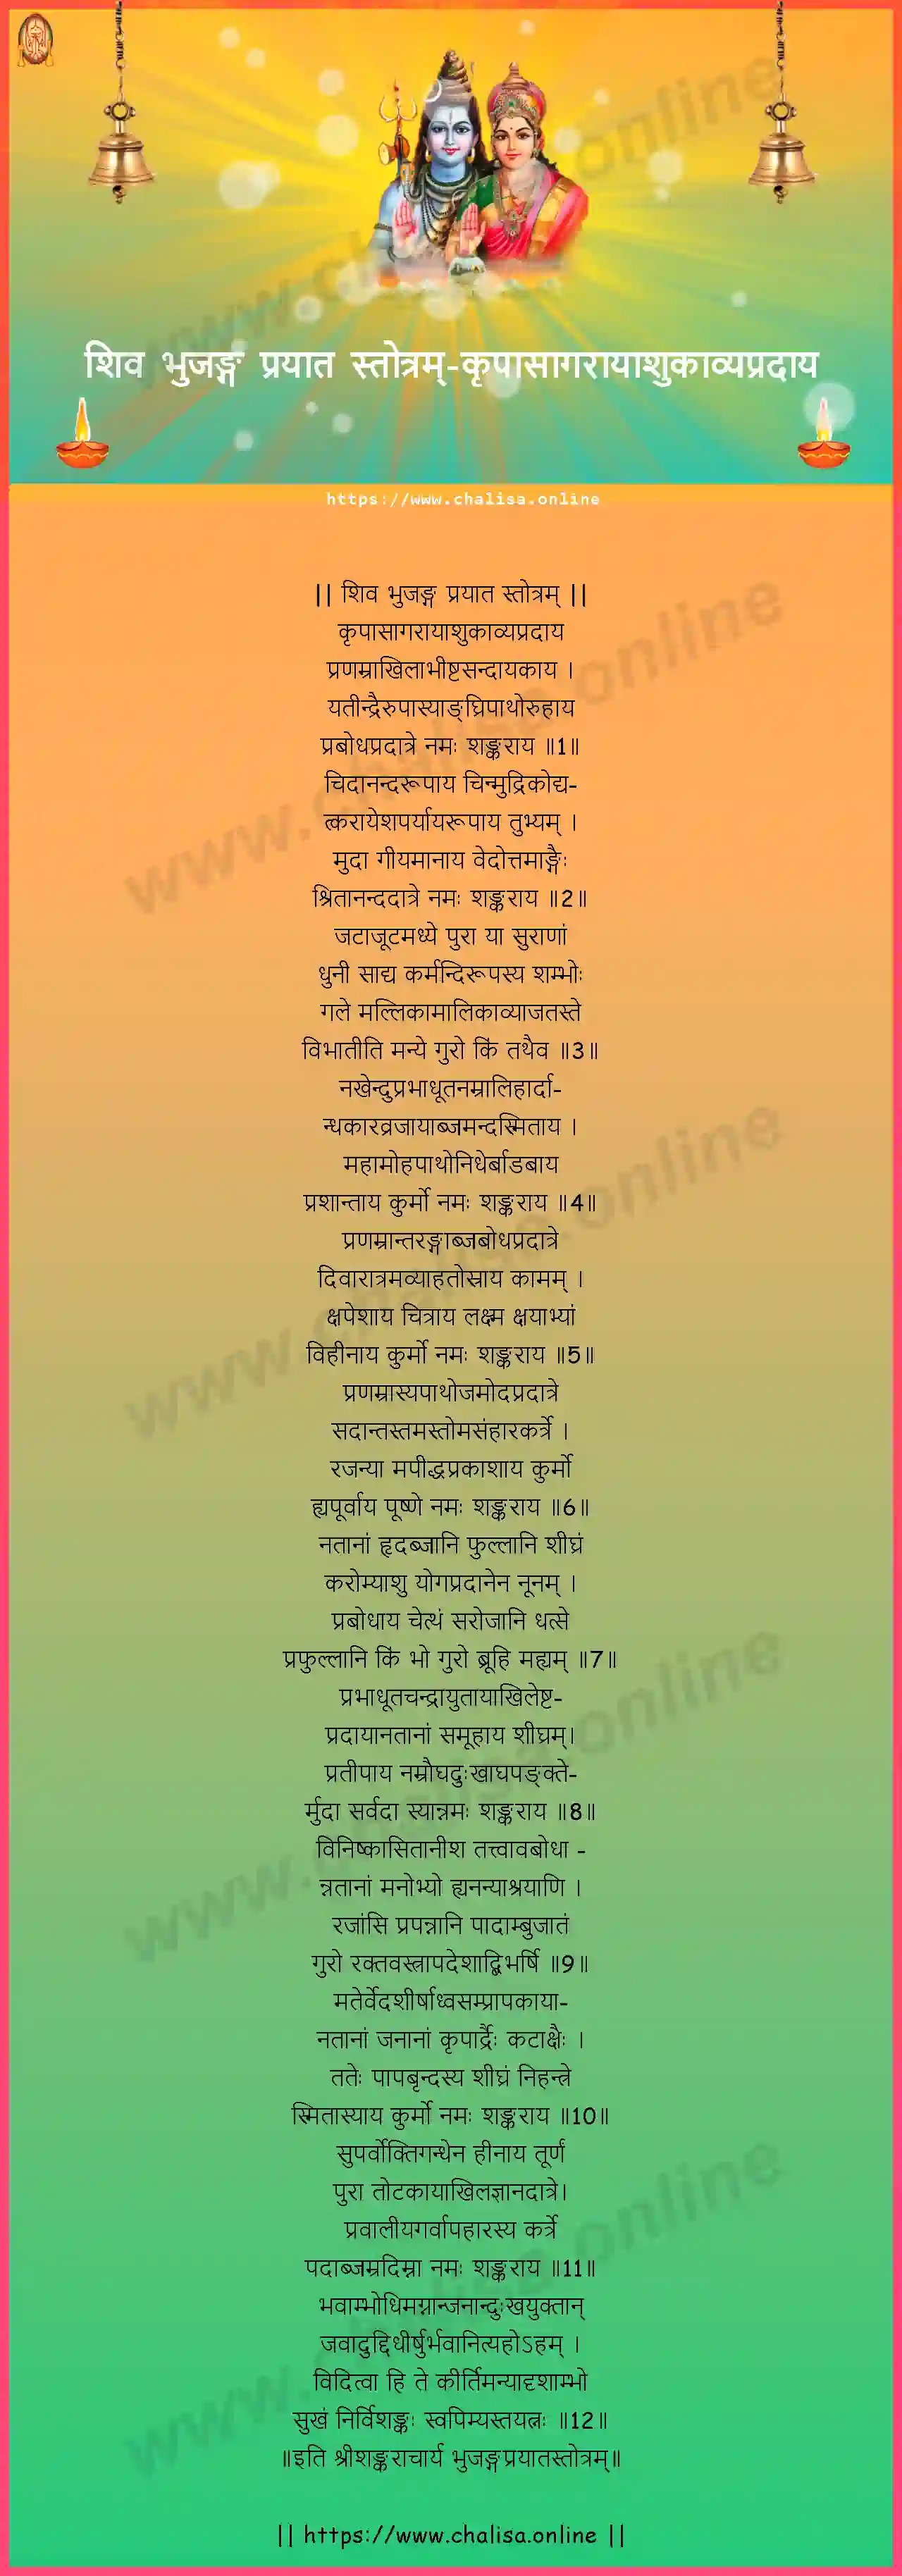 krpasagarayasukavyapradaya-shiva-bhujanga-prayata-stotram-devanagari-devanagari-lyrics-download